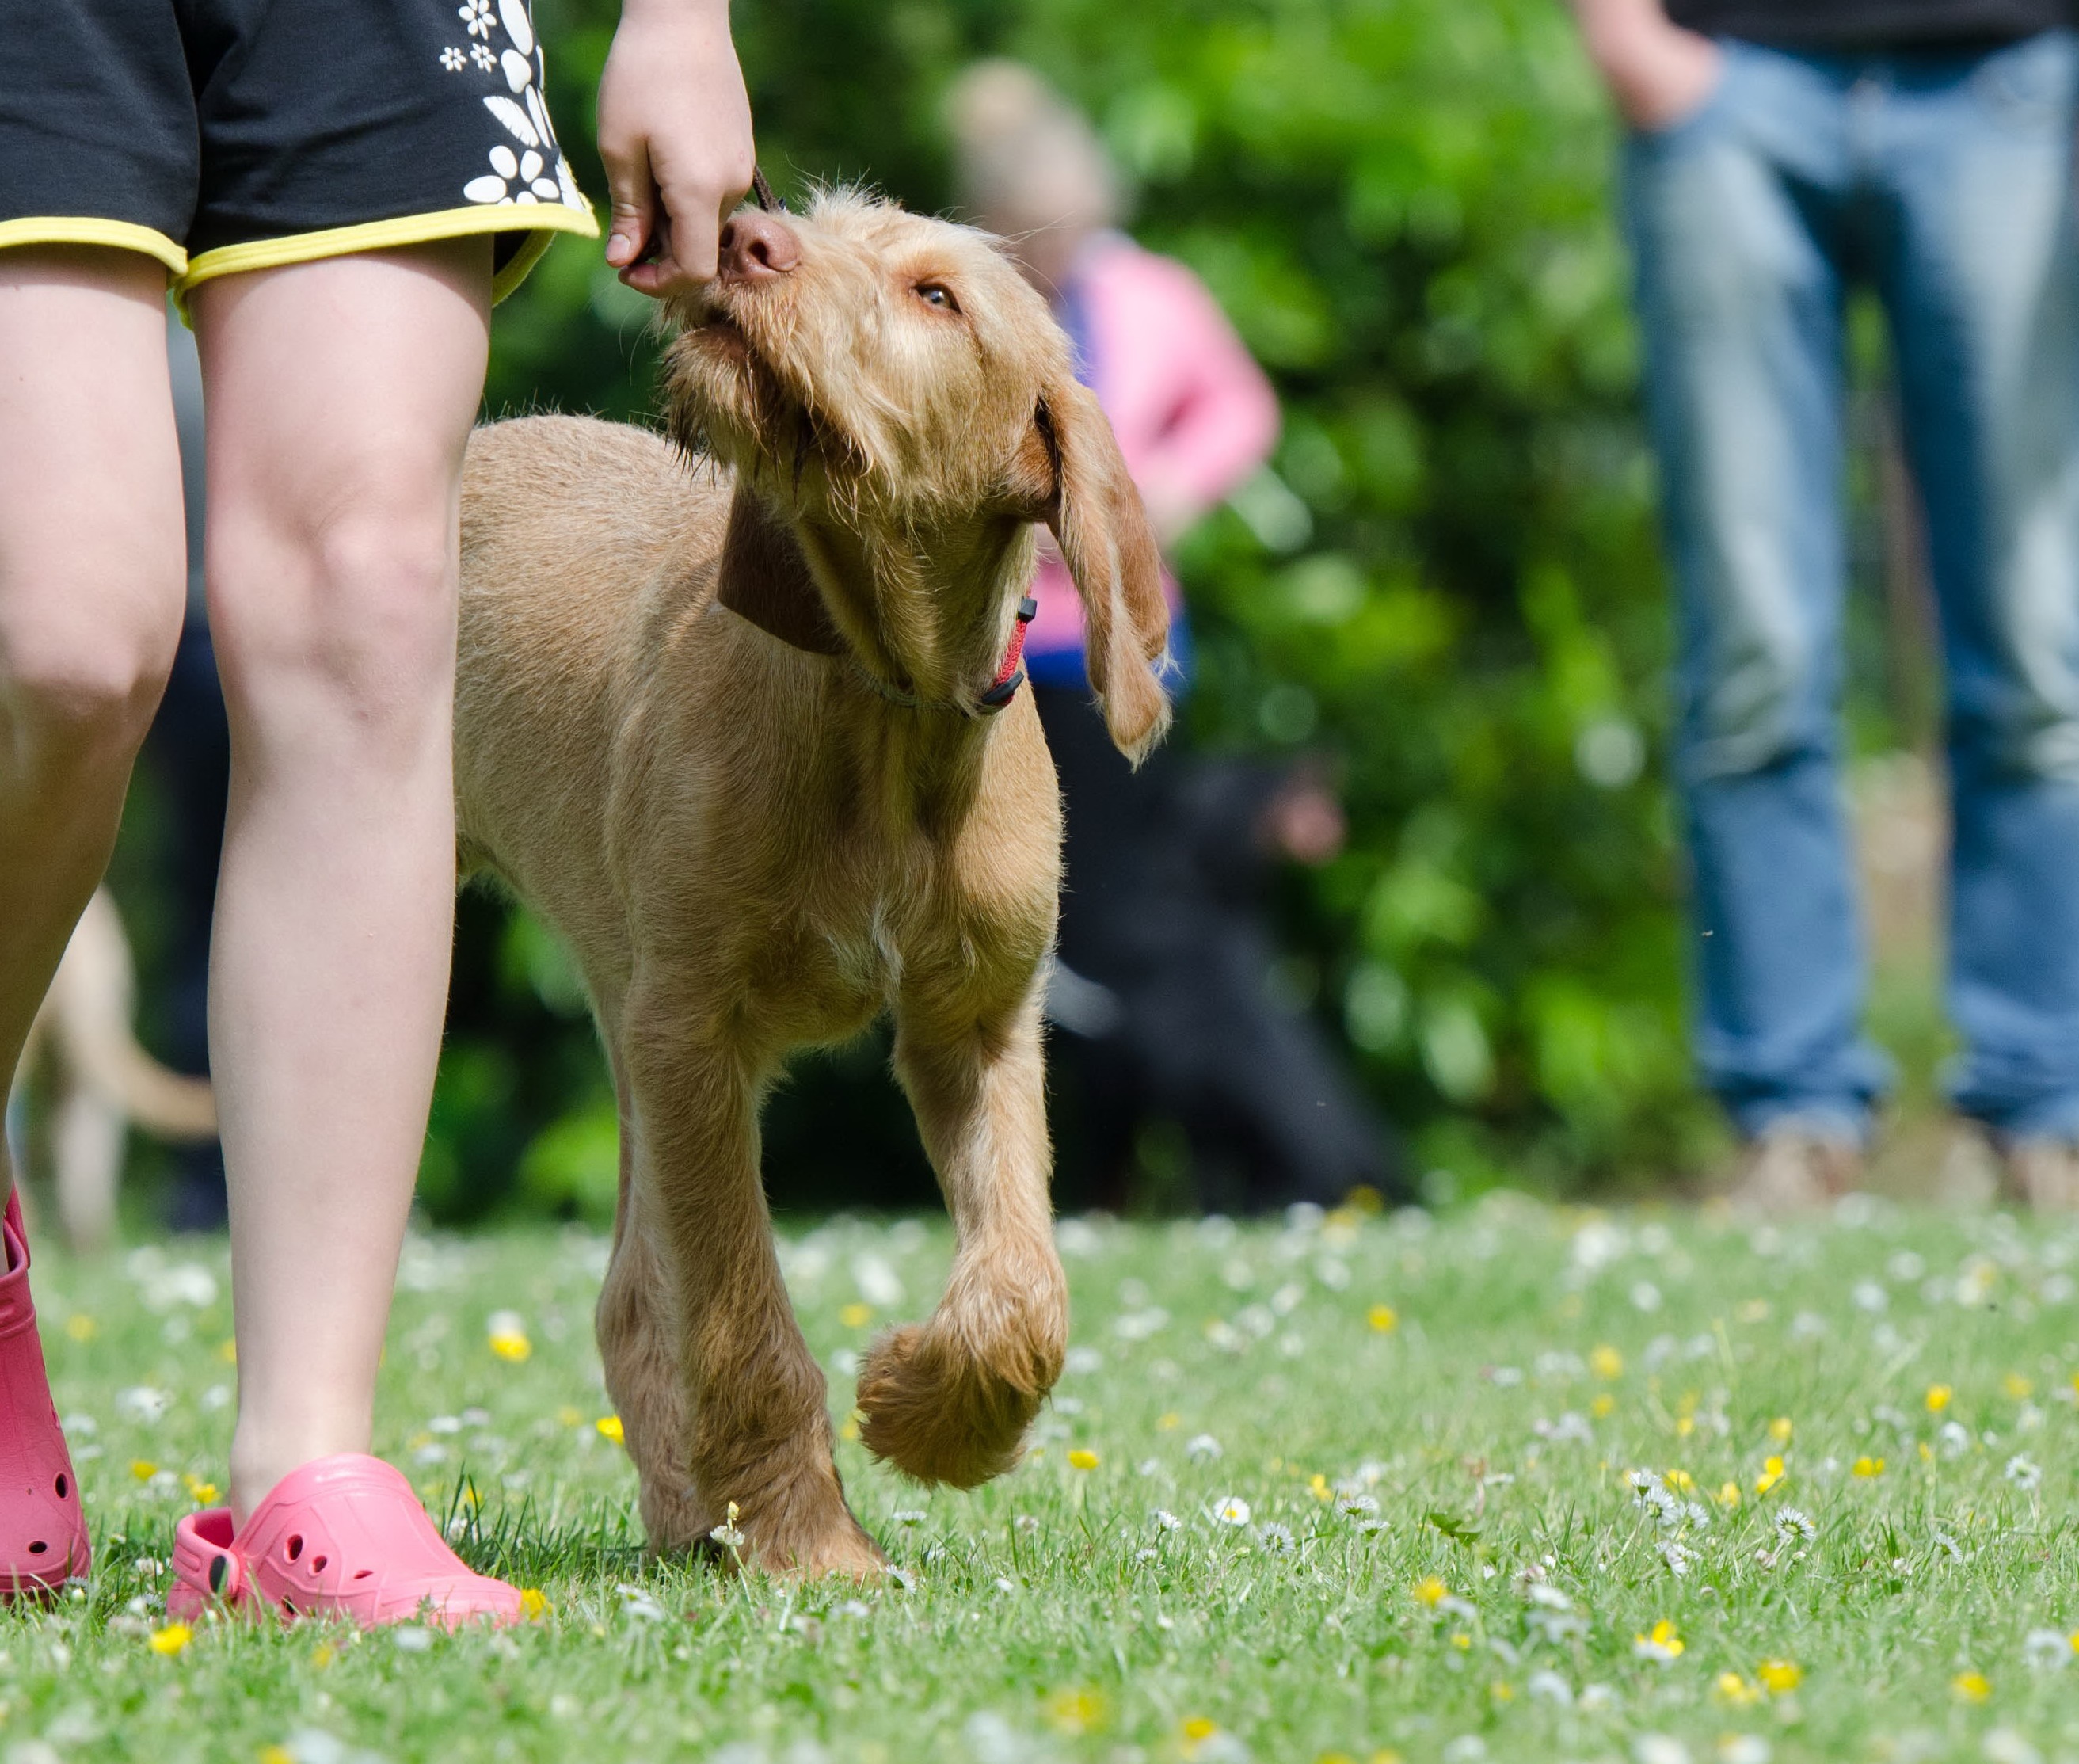 Free Images : grass, lawn, puppy, hunting dog, viszla, vizsla, dog ...